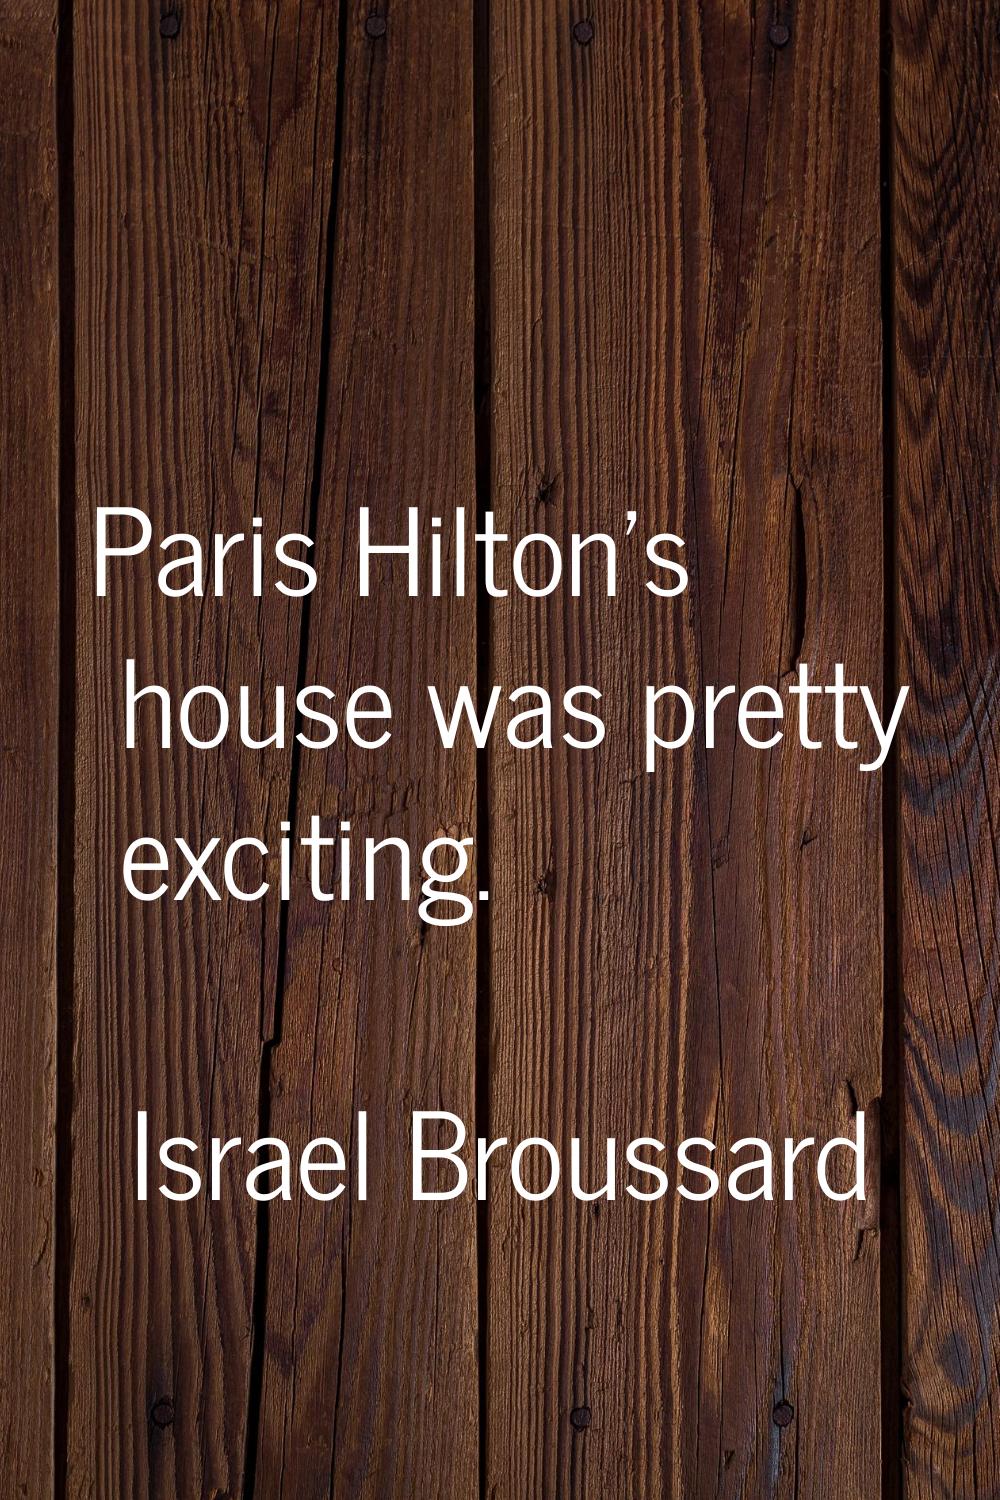 Paris Hilton's house was pretty exciting.